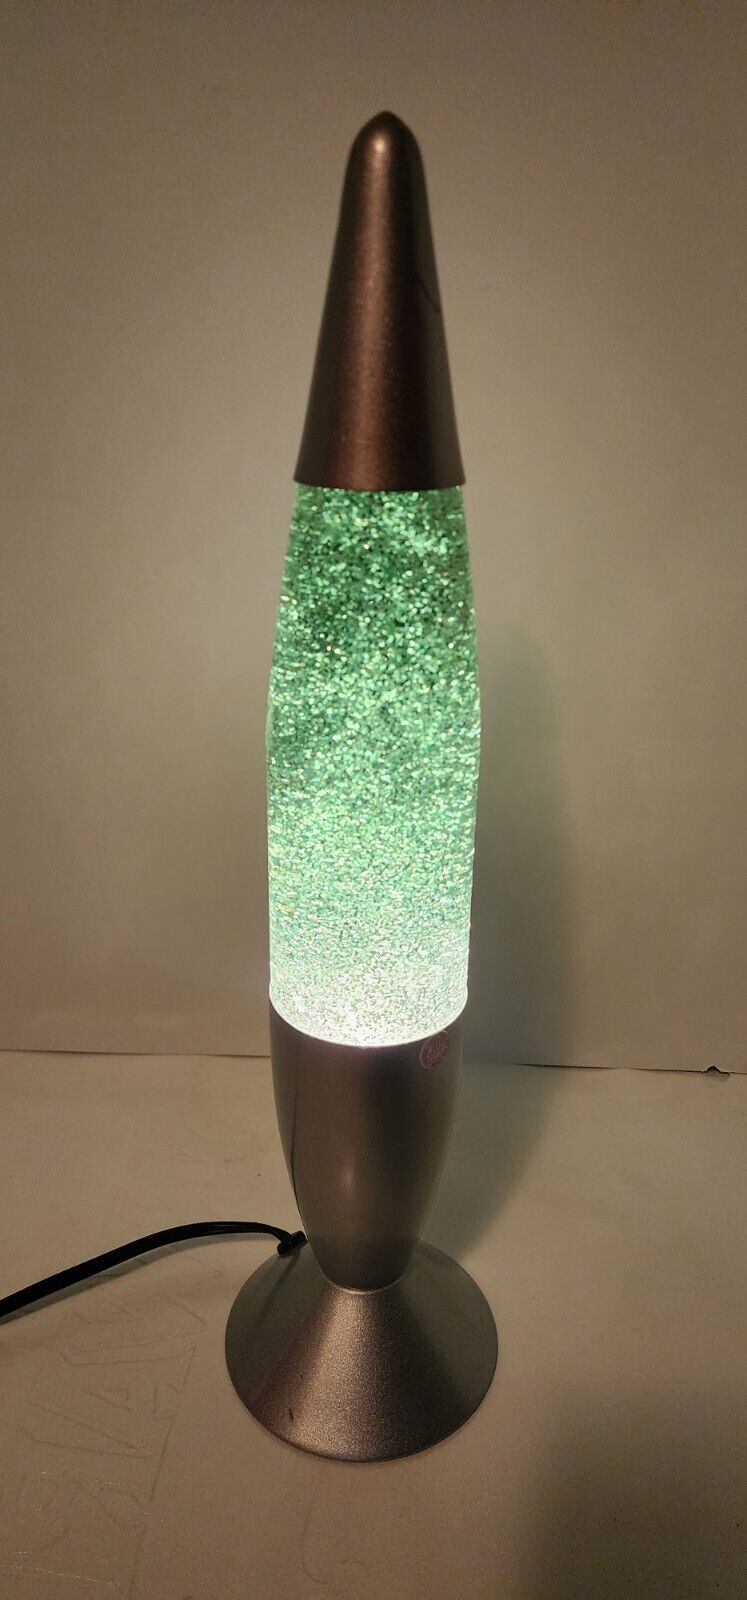 2001  Pliable Art Motion Glitter Silver Bullet Rocket Lava Lamp - Green Glitter 